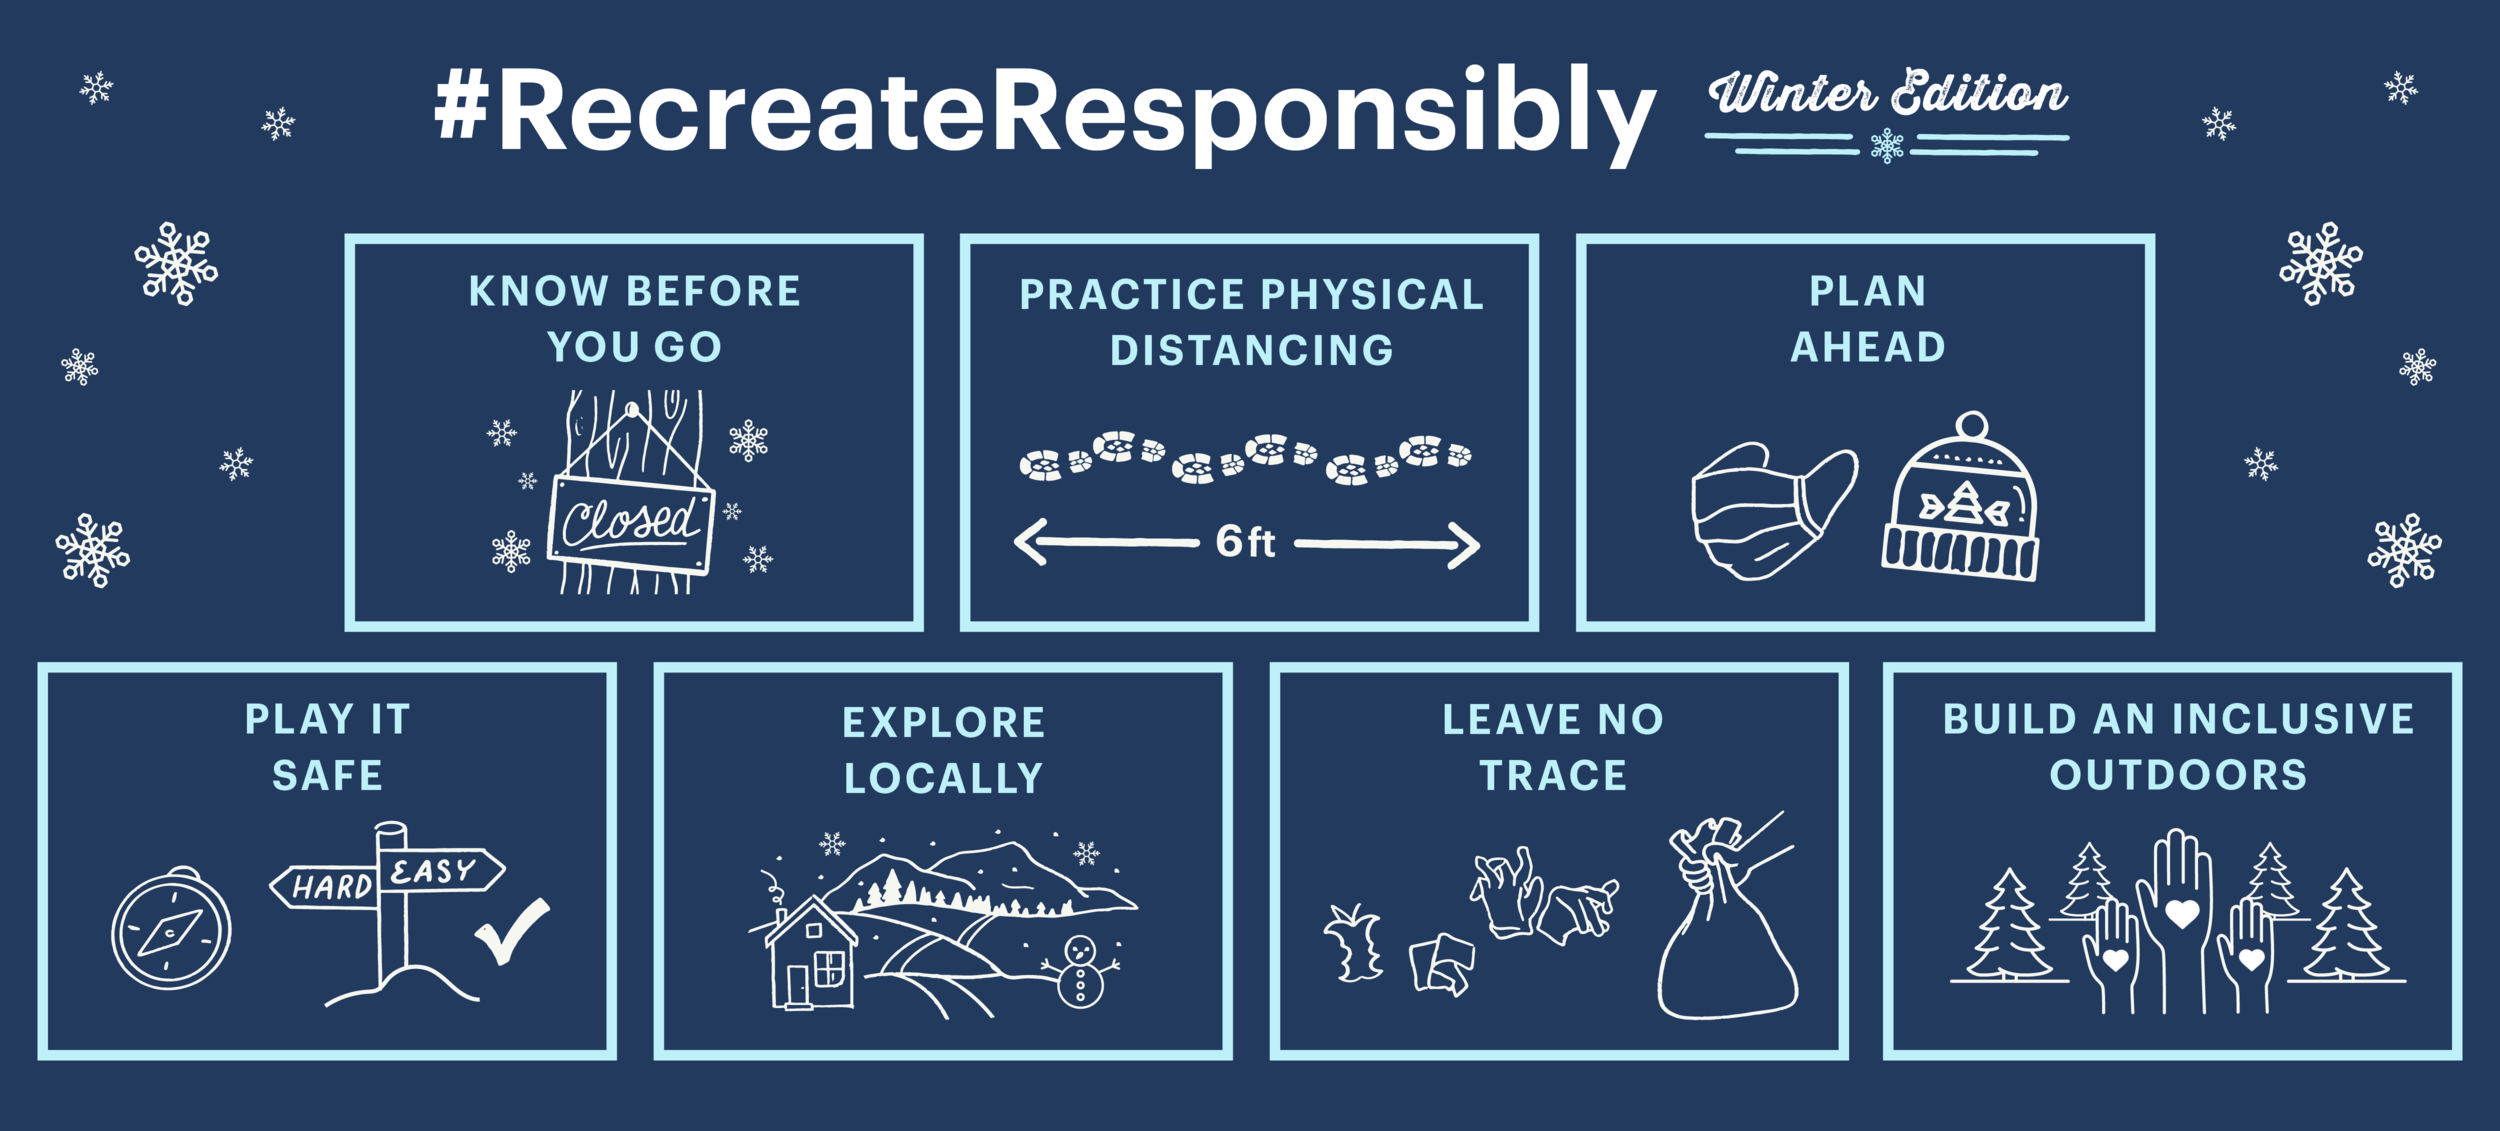 #RecreateResponsibly recreateresponsibly.org/winter